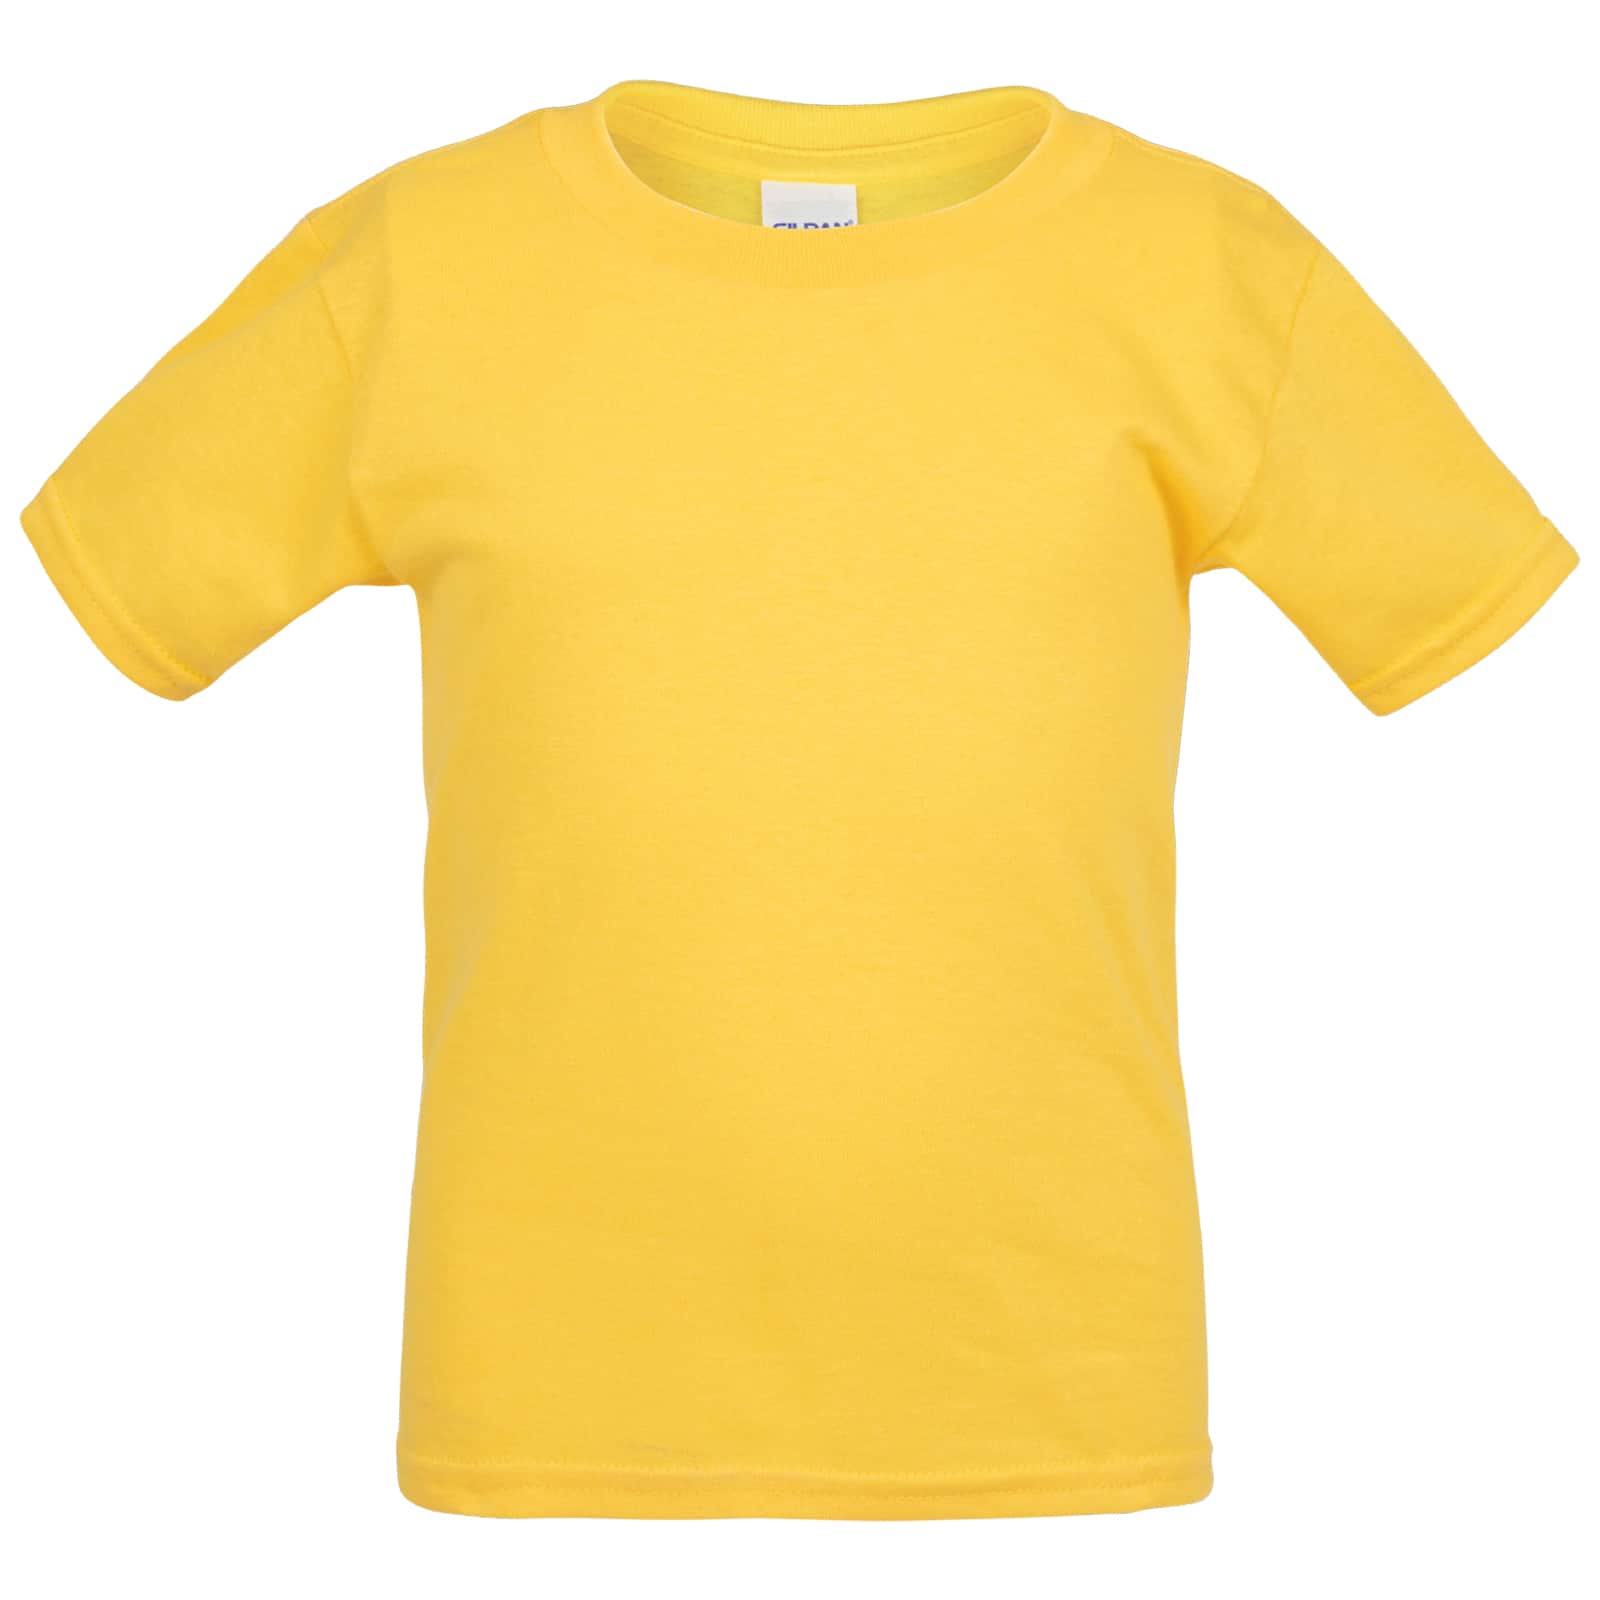 yellow t shirt michaels